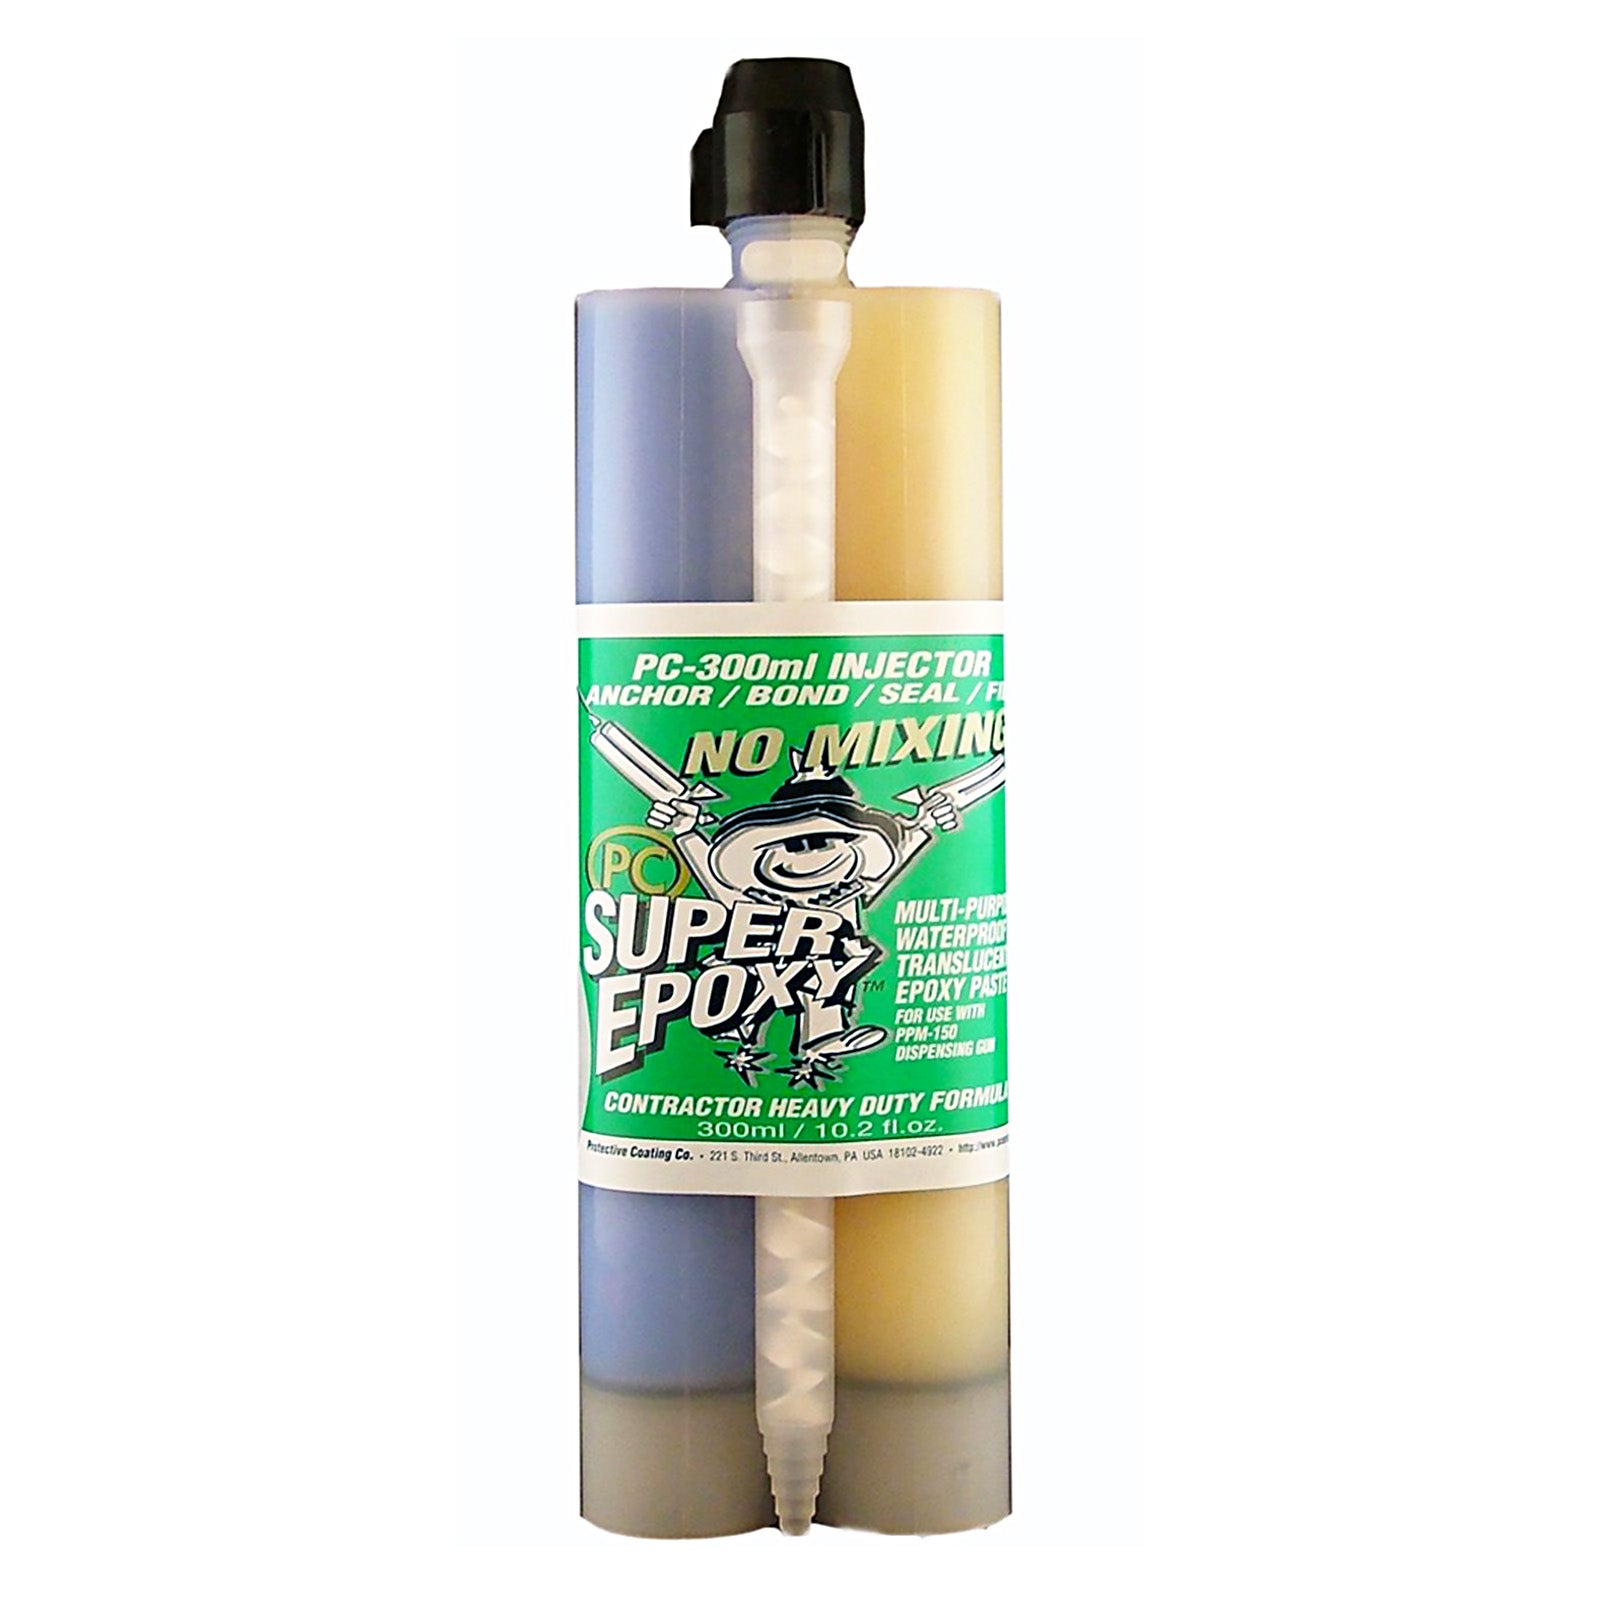 PC-Super Epoxy Adhesive Paste - 300ml Injector Cartridge